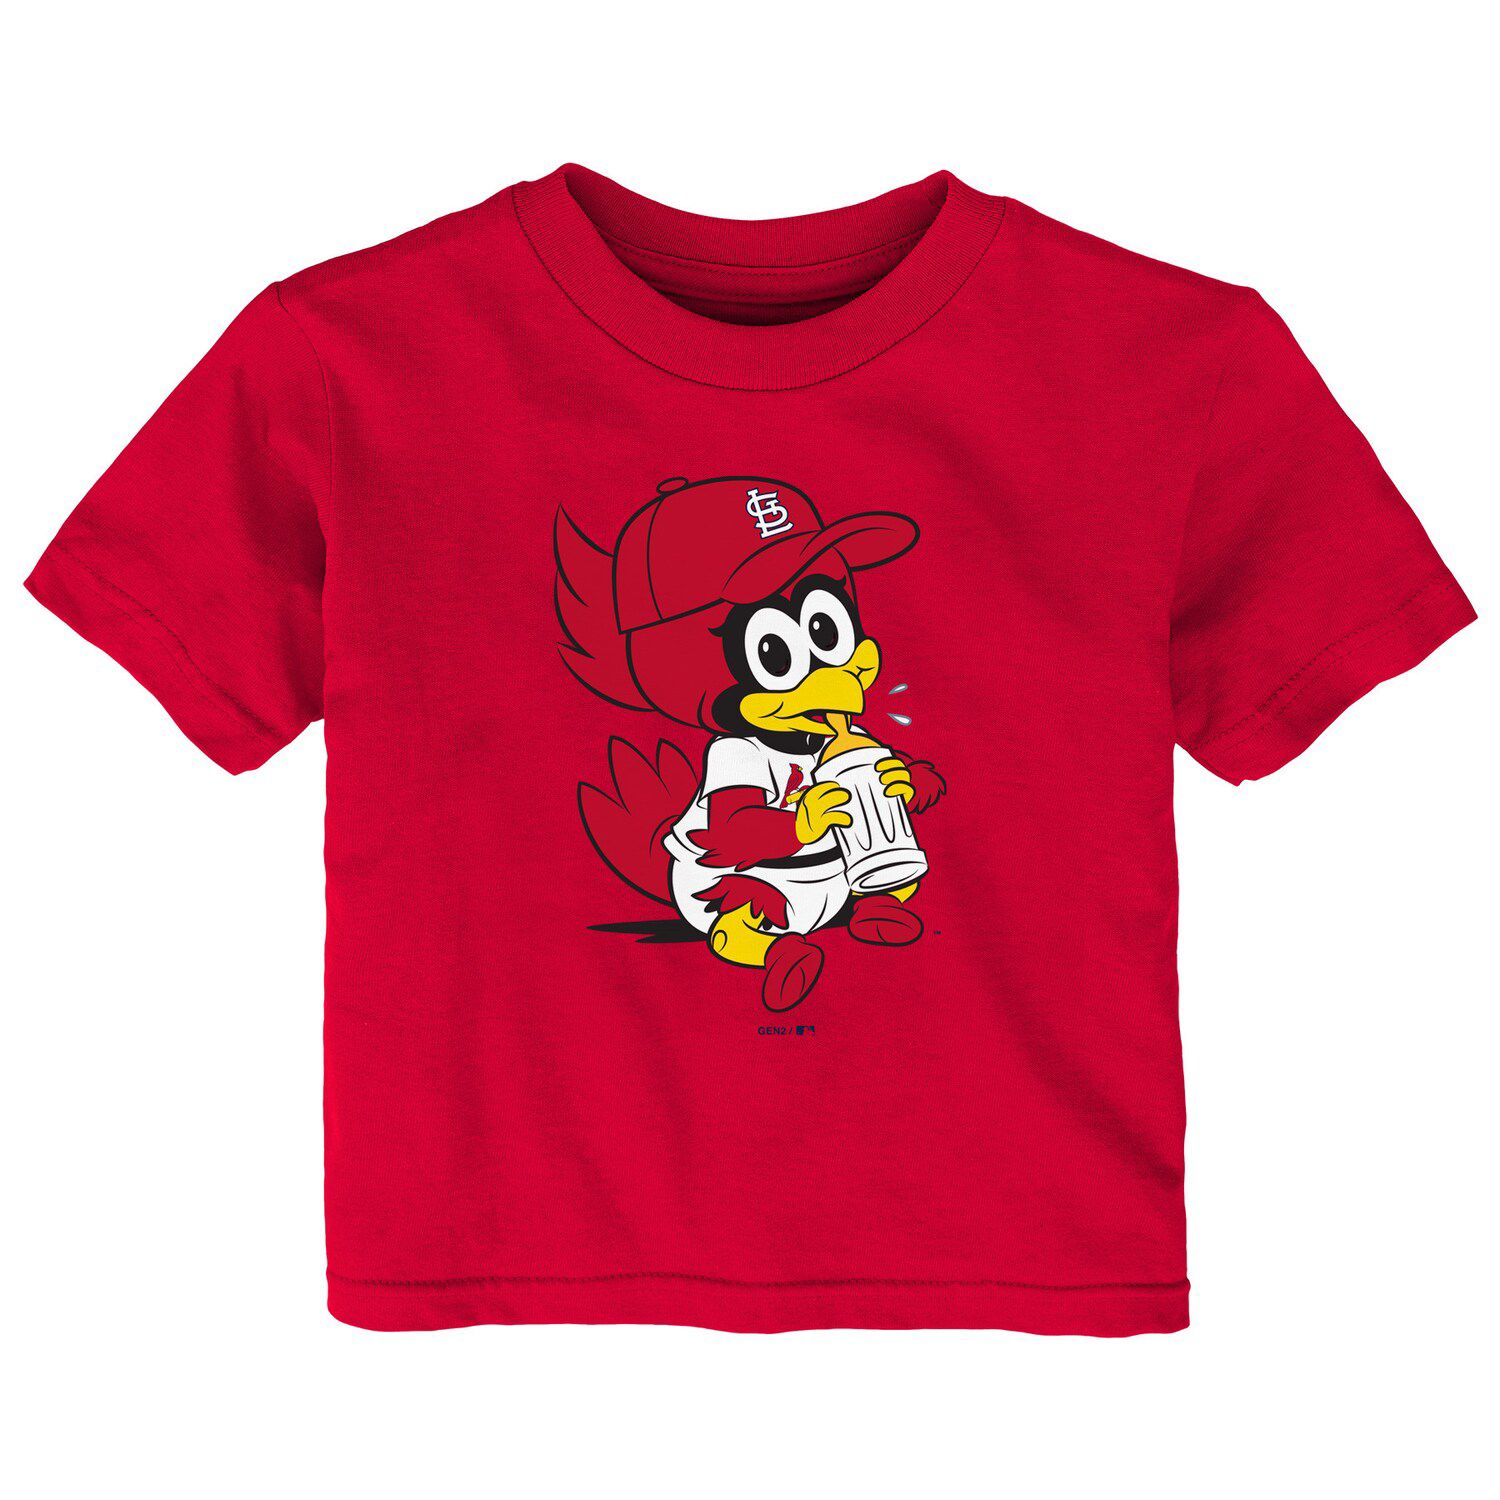 st louis cardinals baby clothes